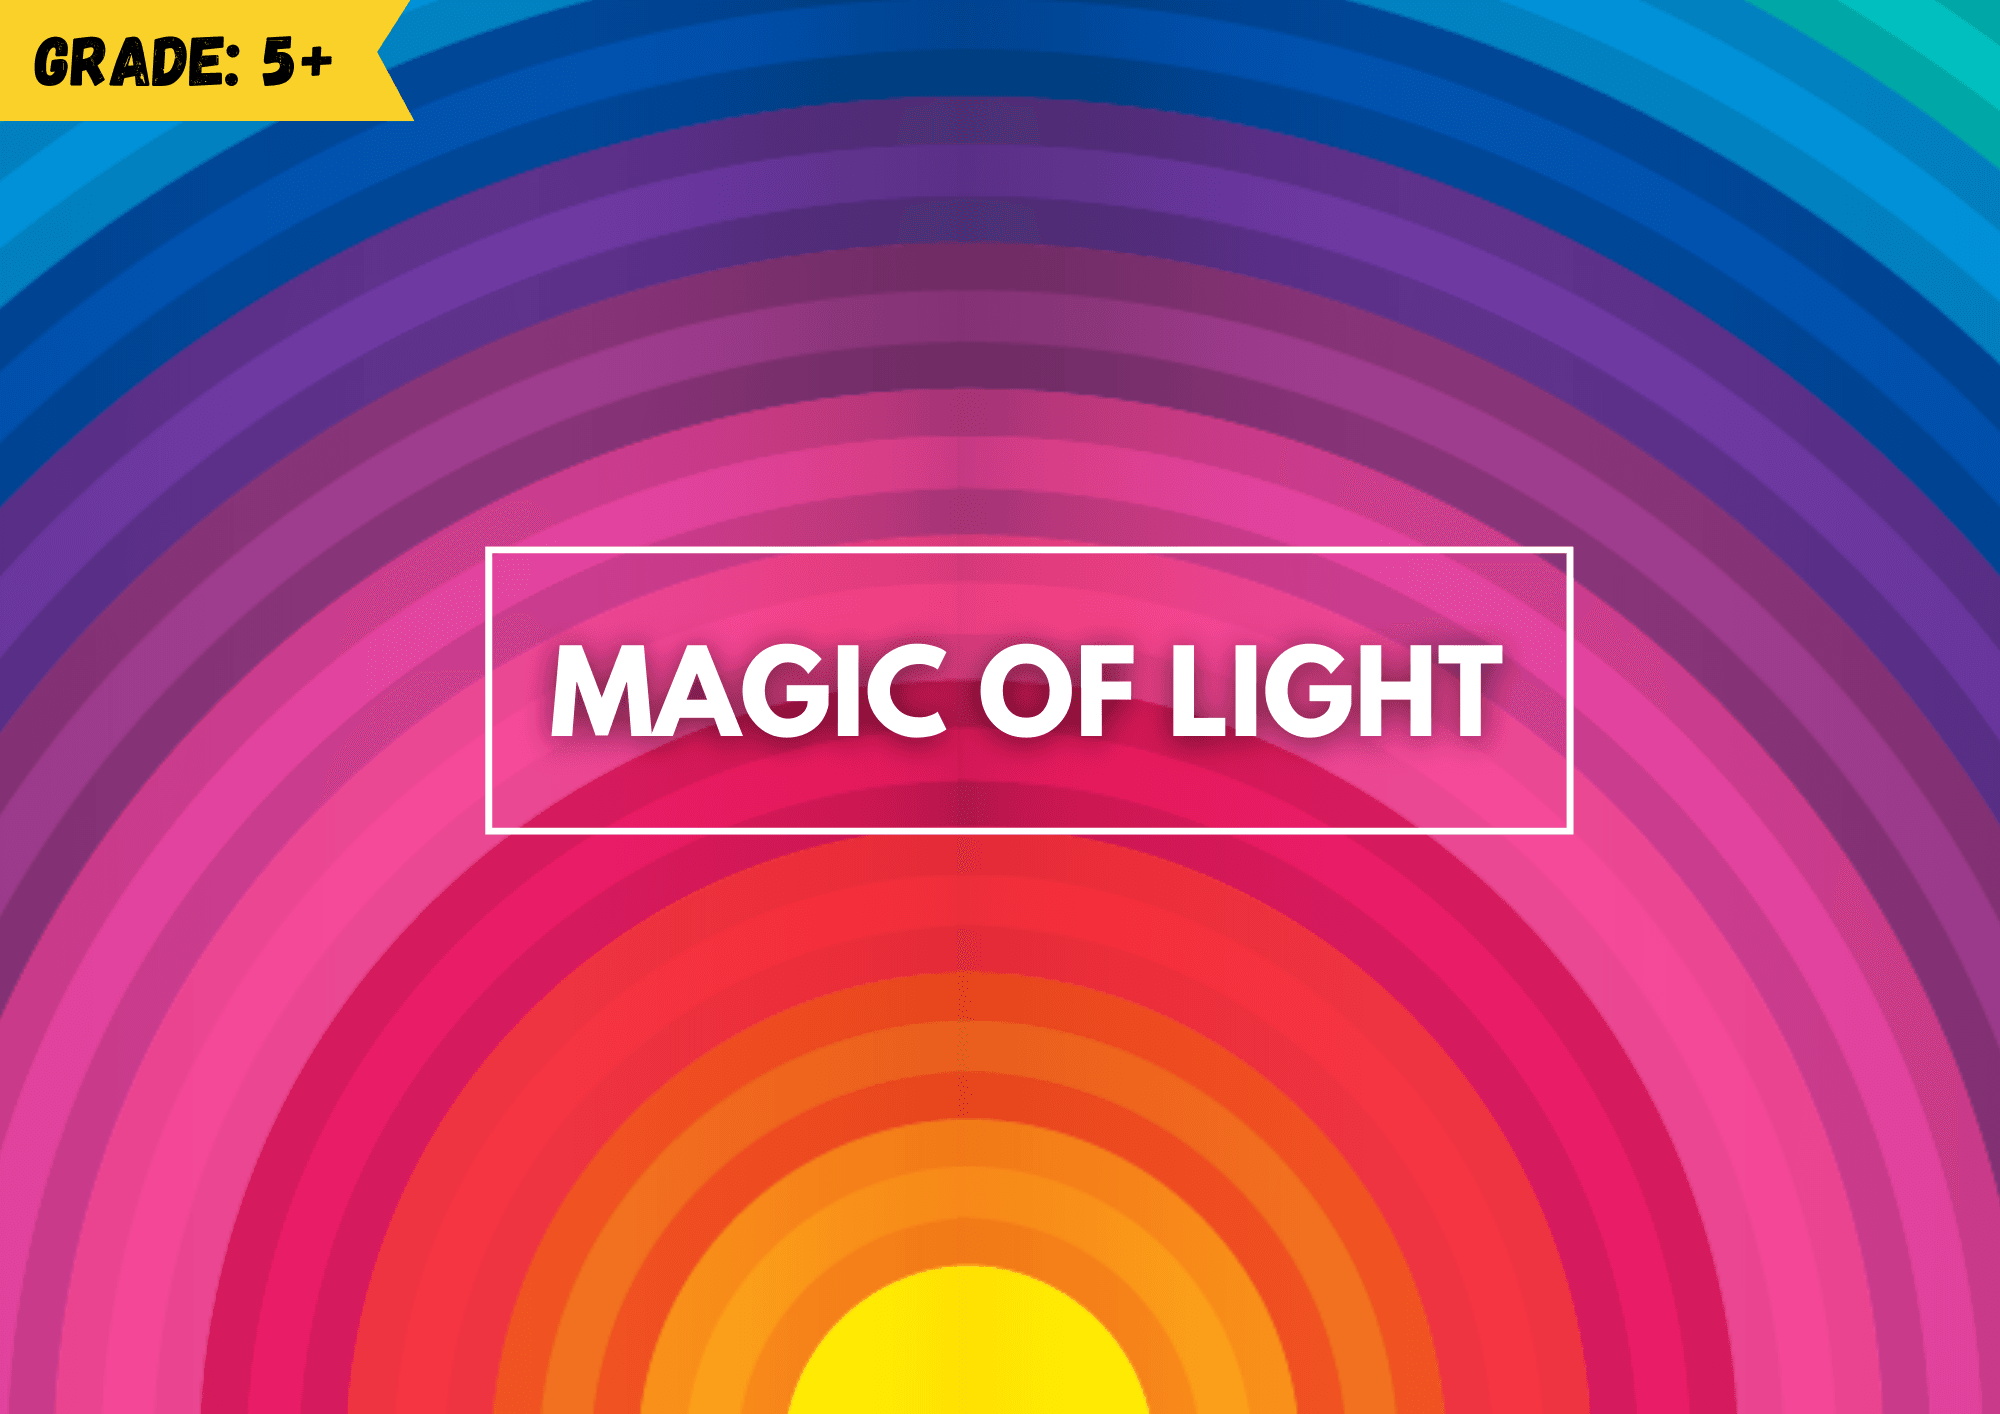 Magic of light